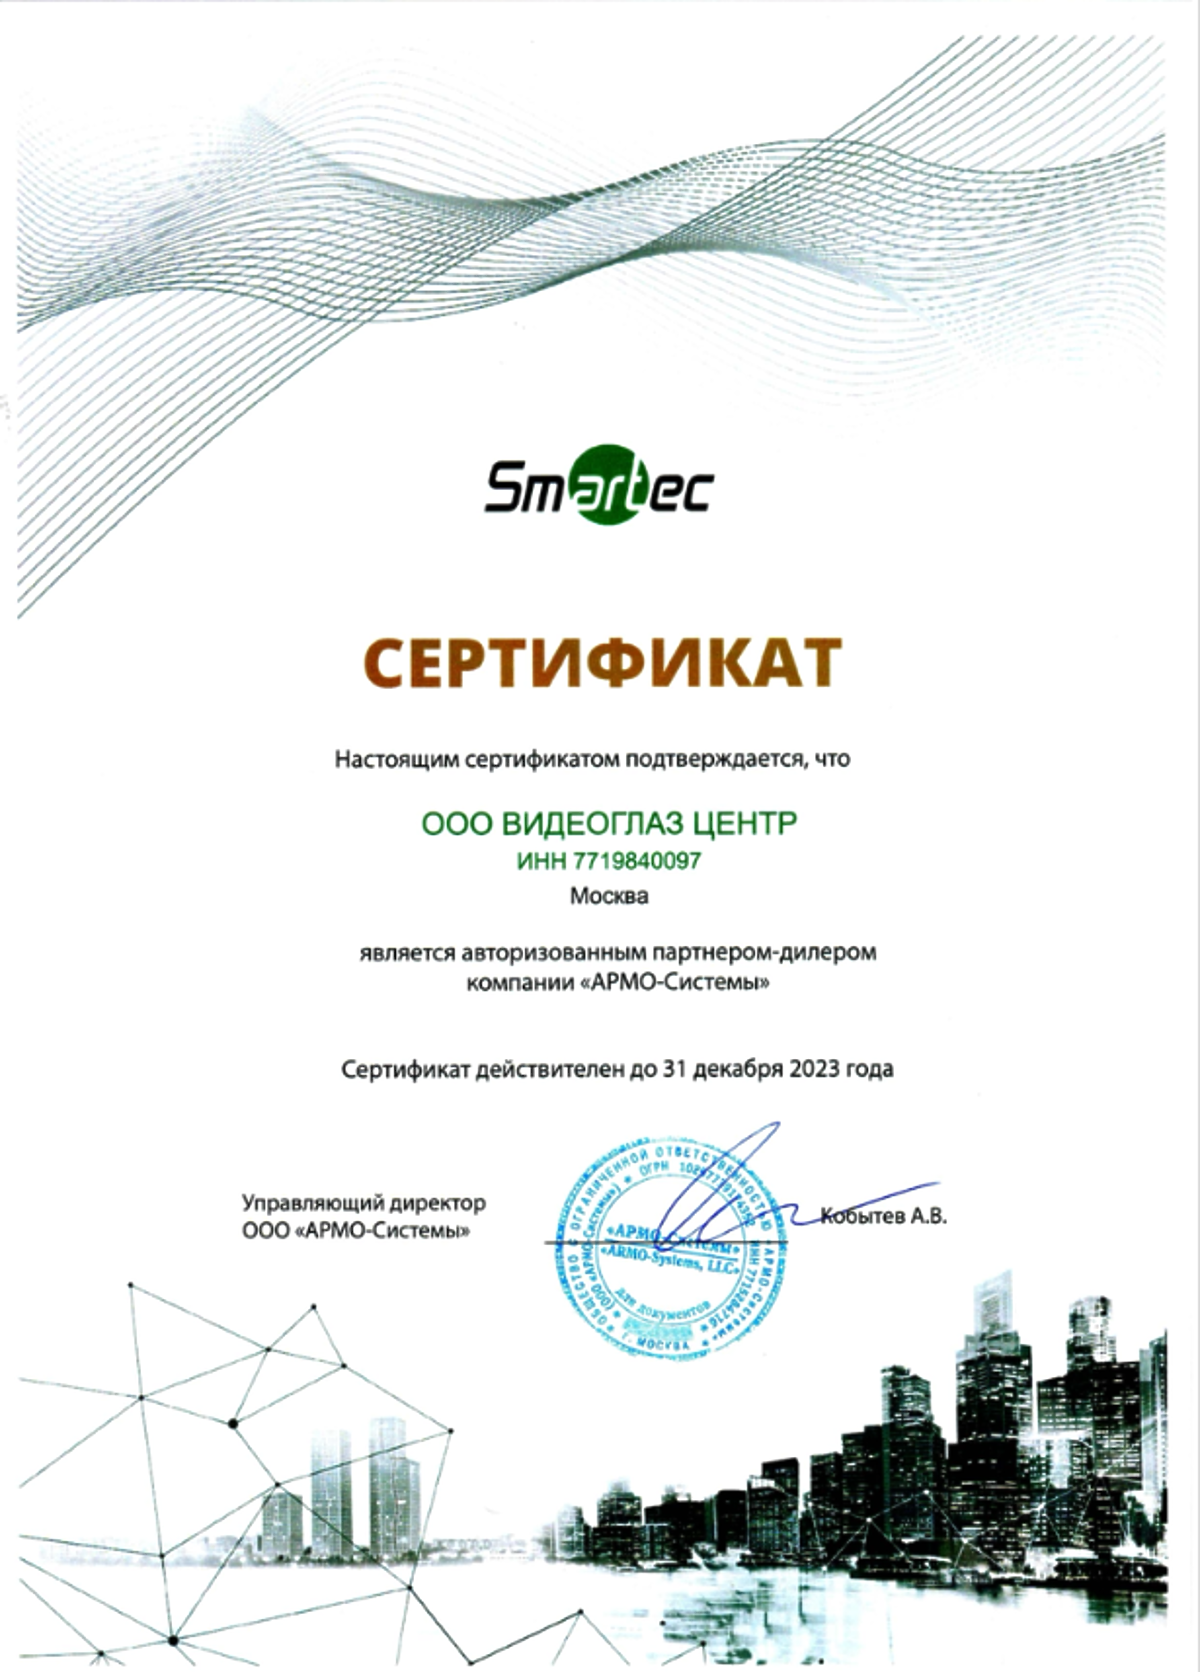 Smartec сертификат